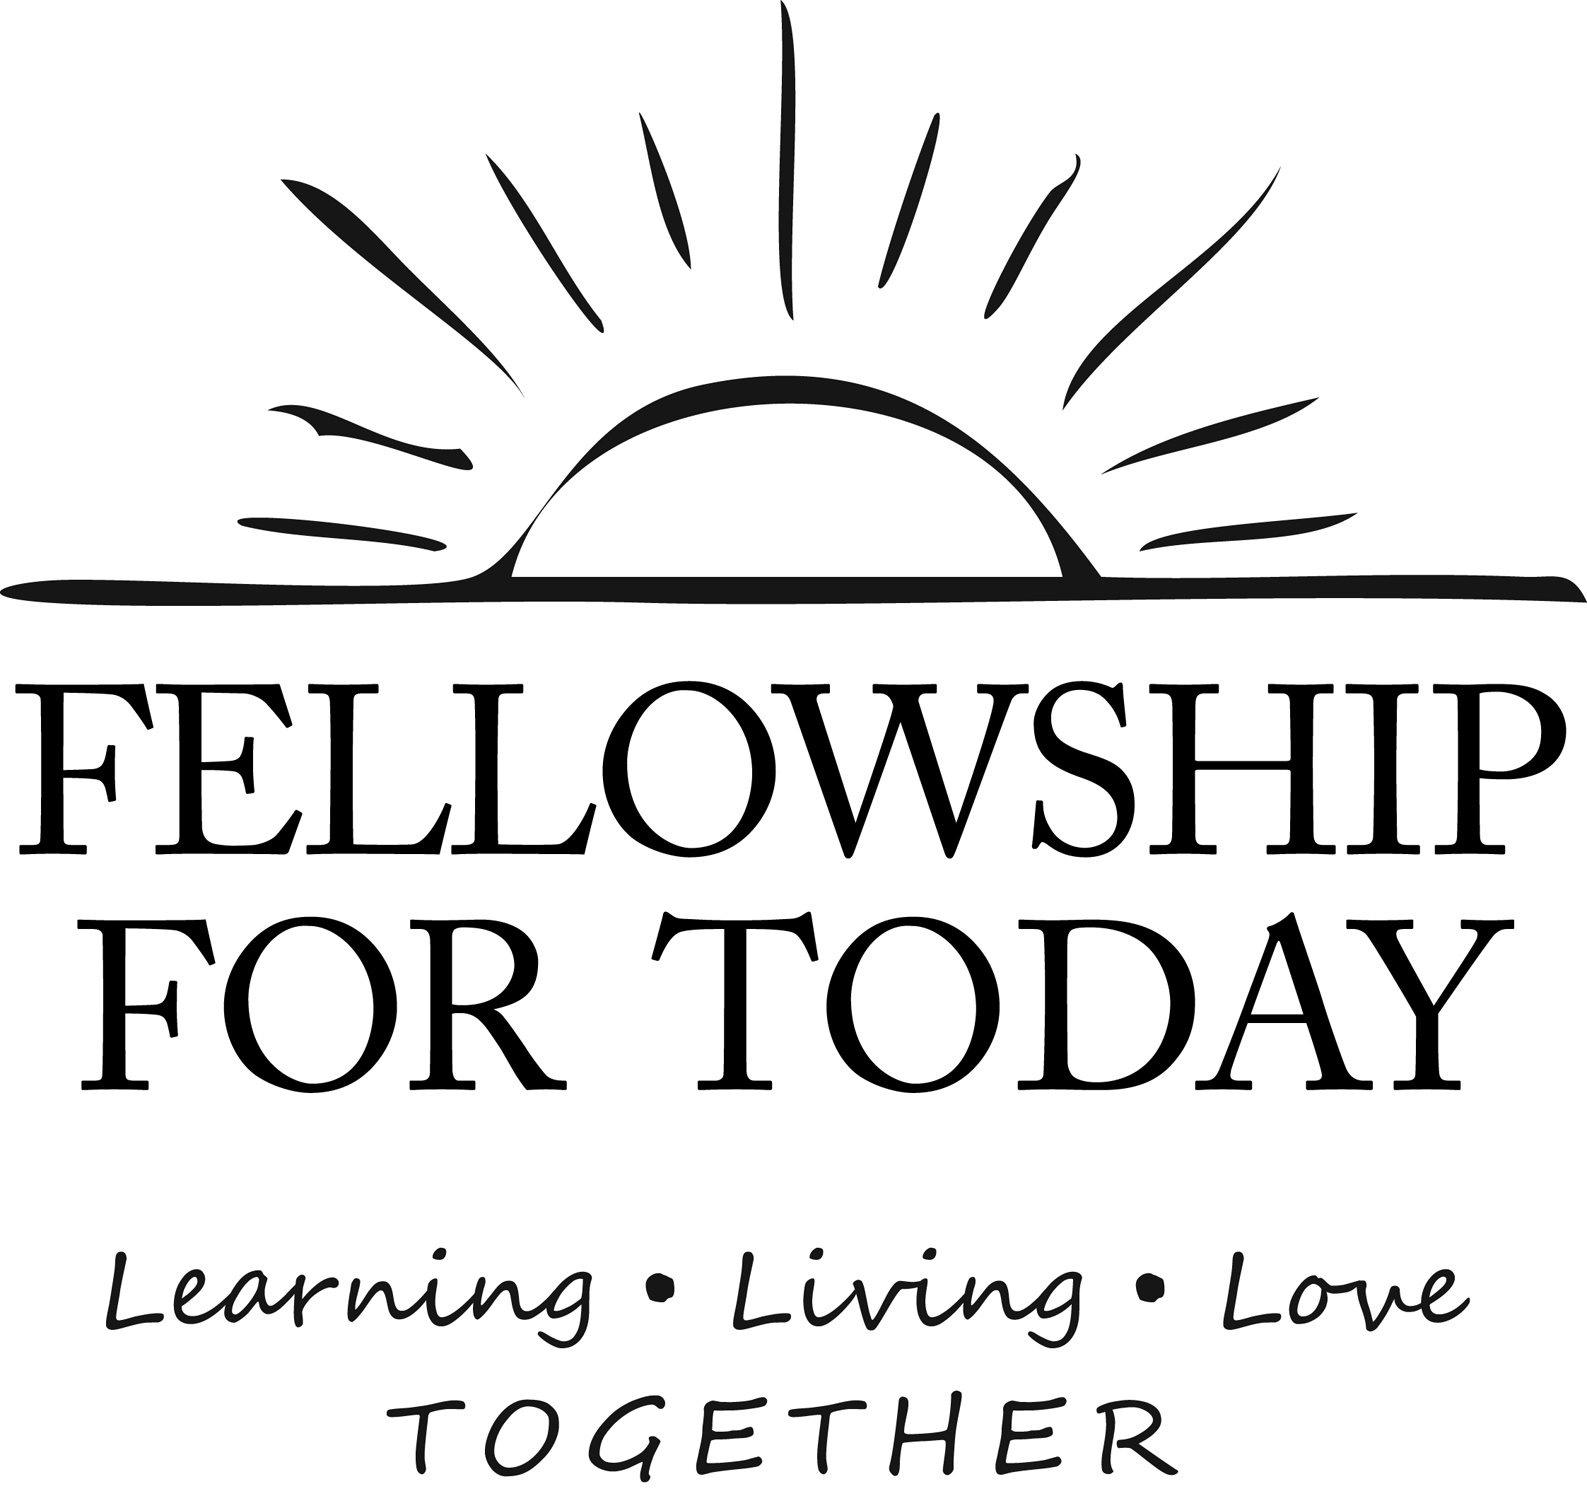 Fellowship For Today